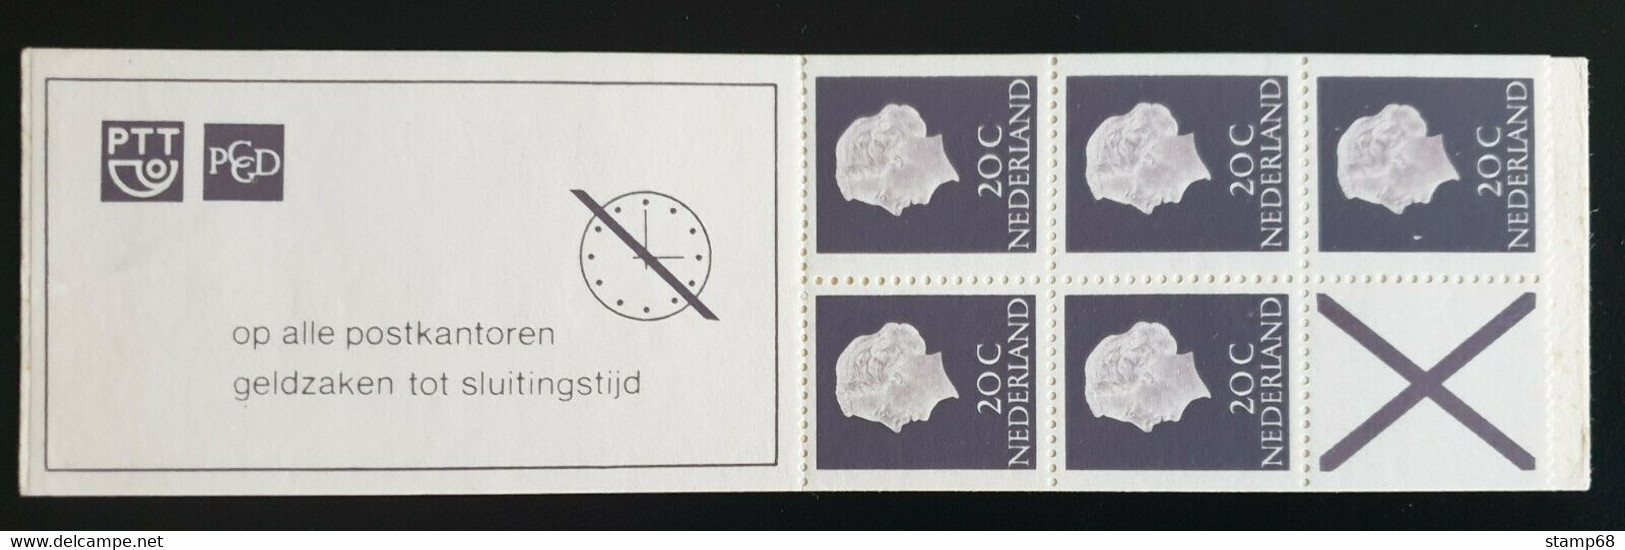 Nederland NVPH PB6eF Smal Kruis Postzegelboekje 1968 MNH Postfris - Carnets Et Roulettes